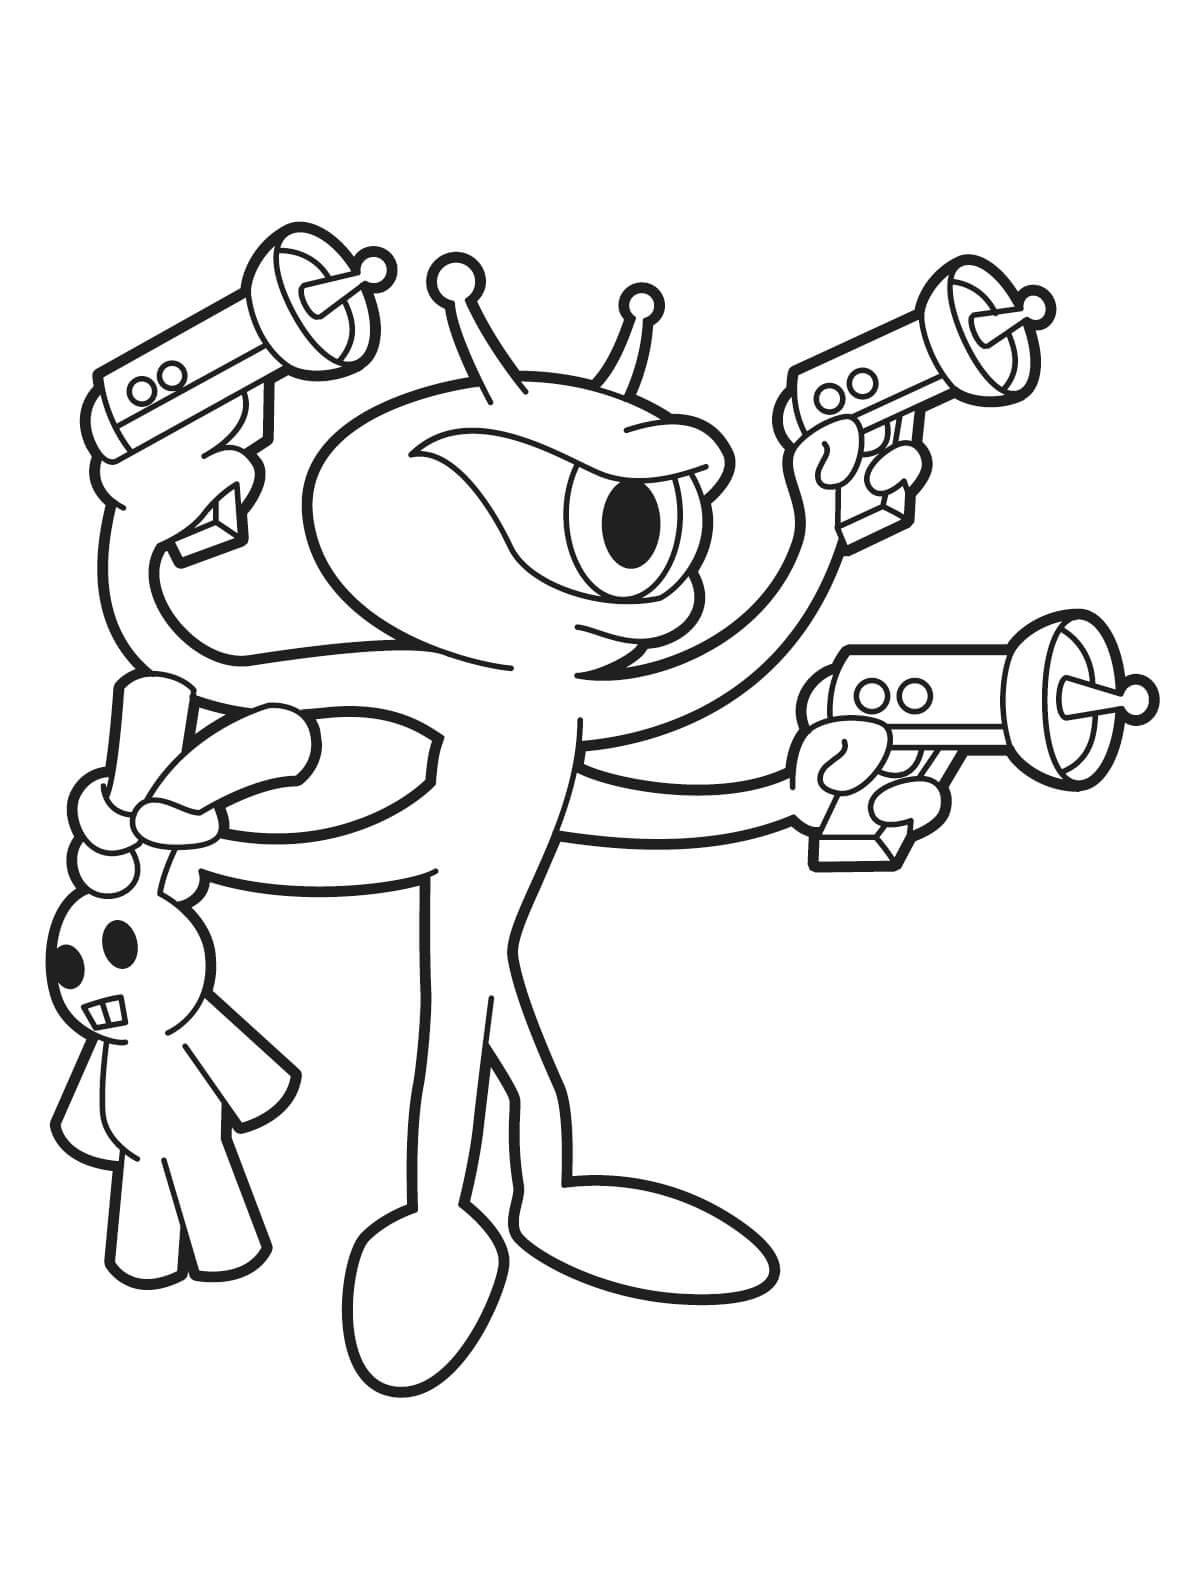 Alienígena com Armas e Brinquedos para colorir